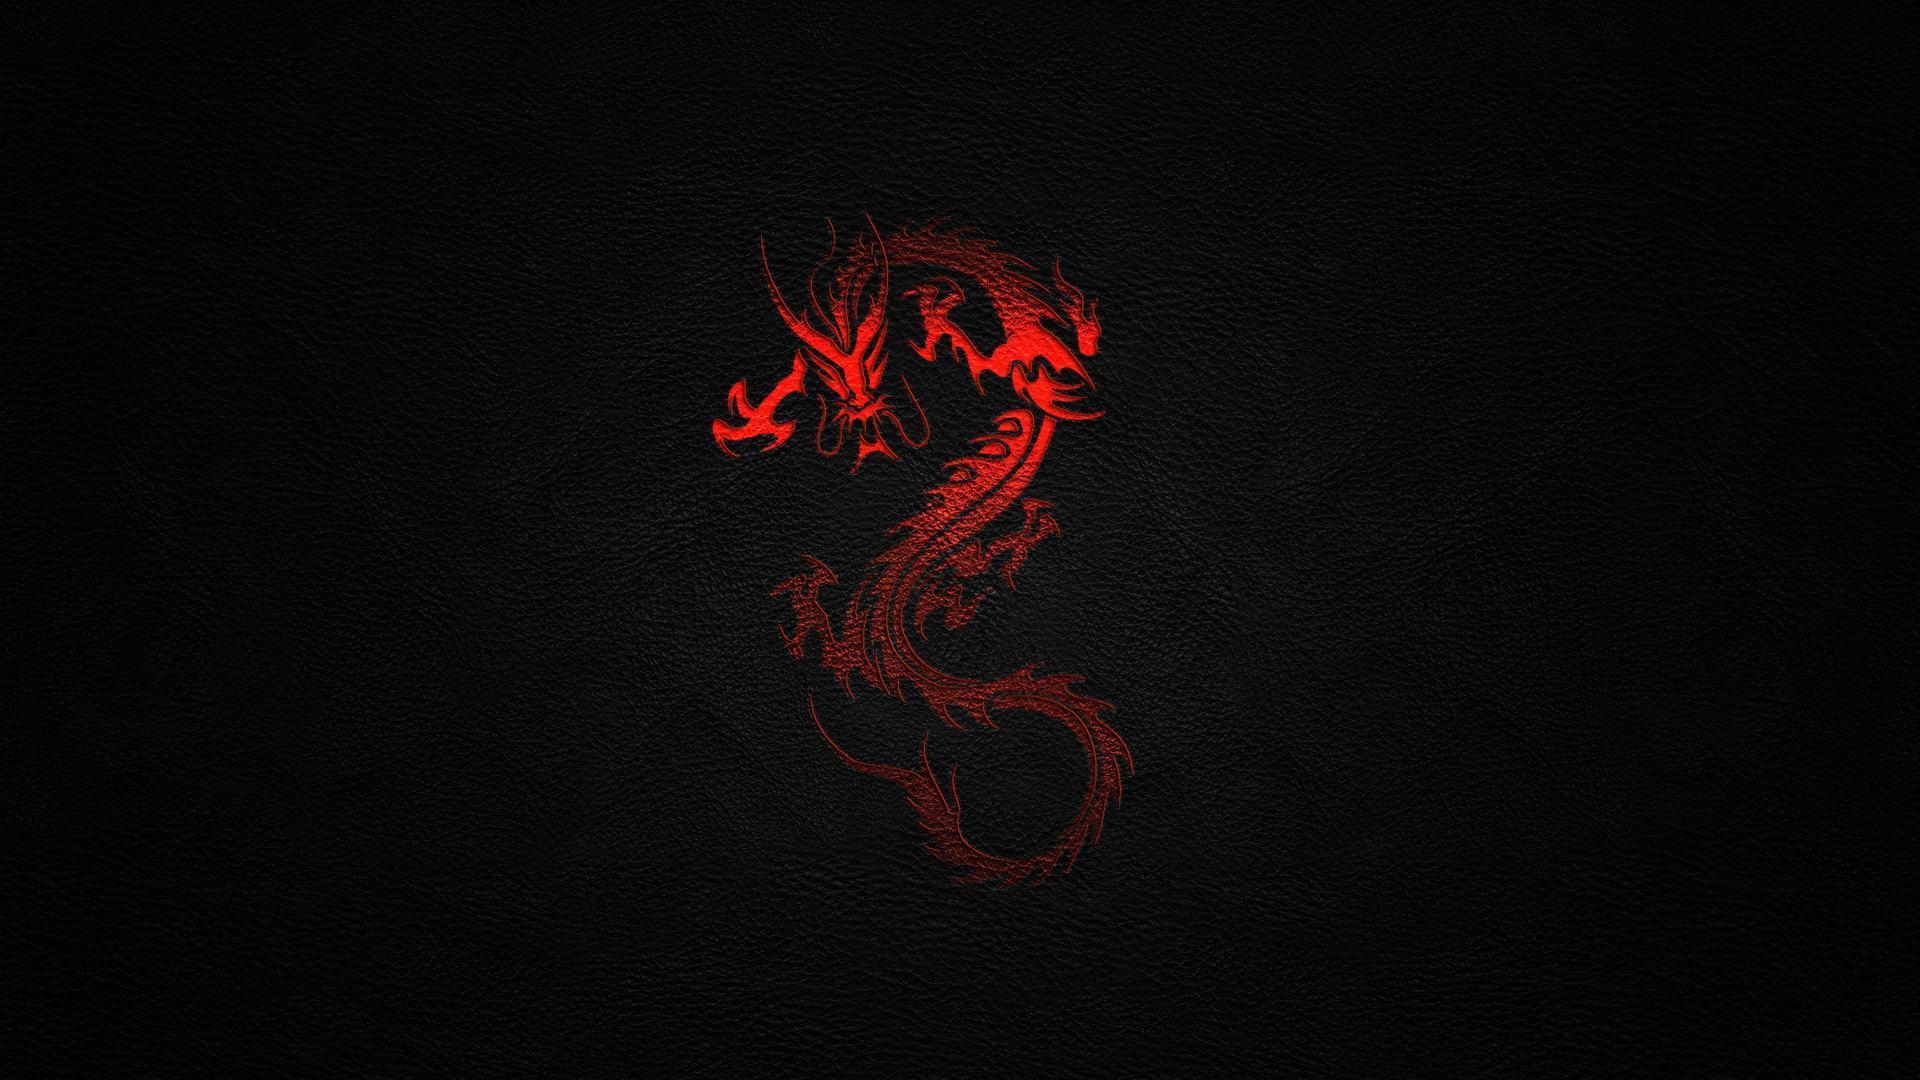 Red and Black Dragon Wallpaper .wallpaperaccess.com